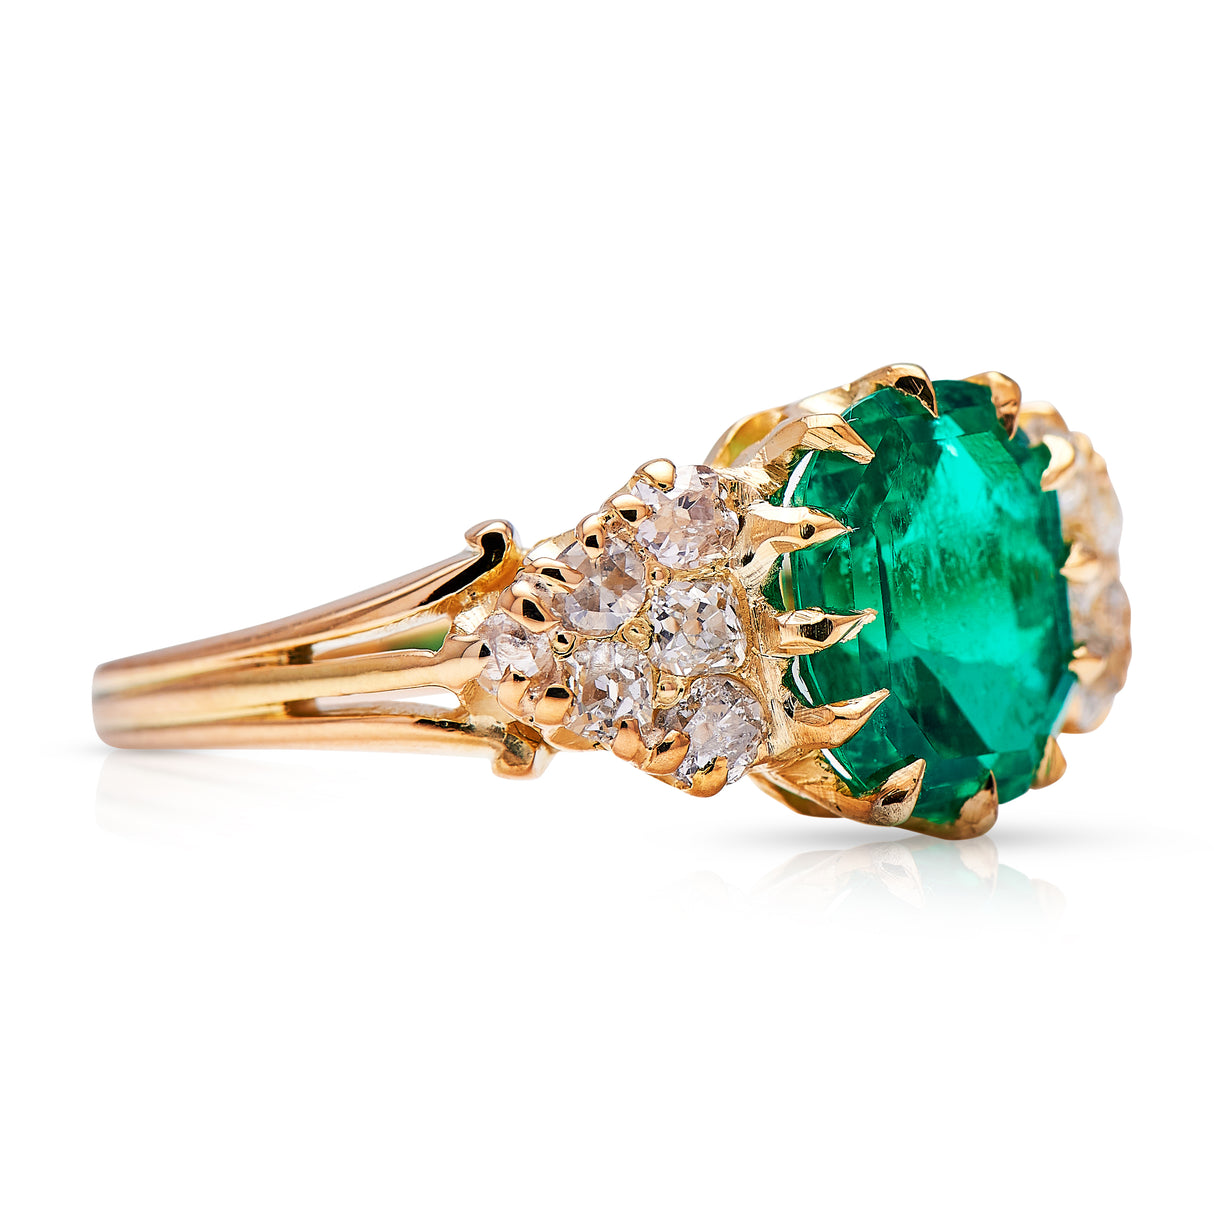 Antique_Emerald_Engagement_Rings | Antique_Emerald_Engagement_Rings | Vintage_Rings | Vintage_Engagement_Rings